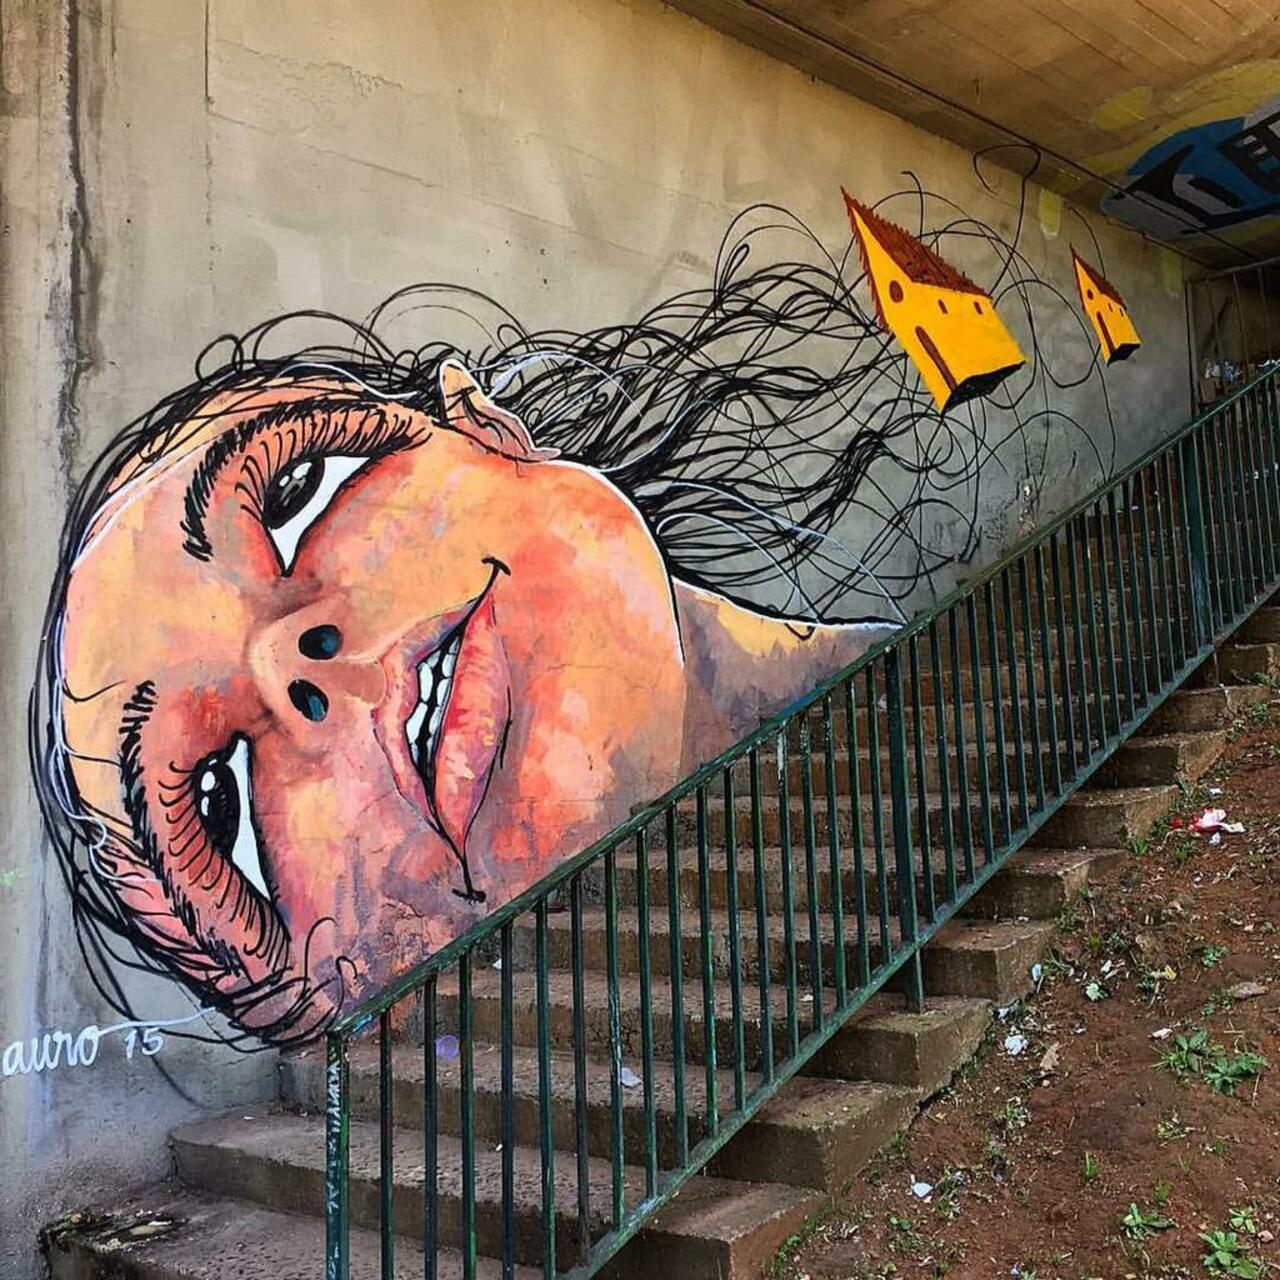 RT belilac "Street Art by Reveracidade in São Paulo 

#art #graffiti #mural #streetart http://t.co/ExUXoIutkT"